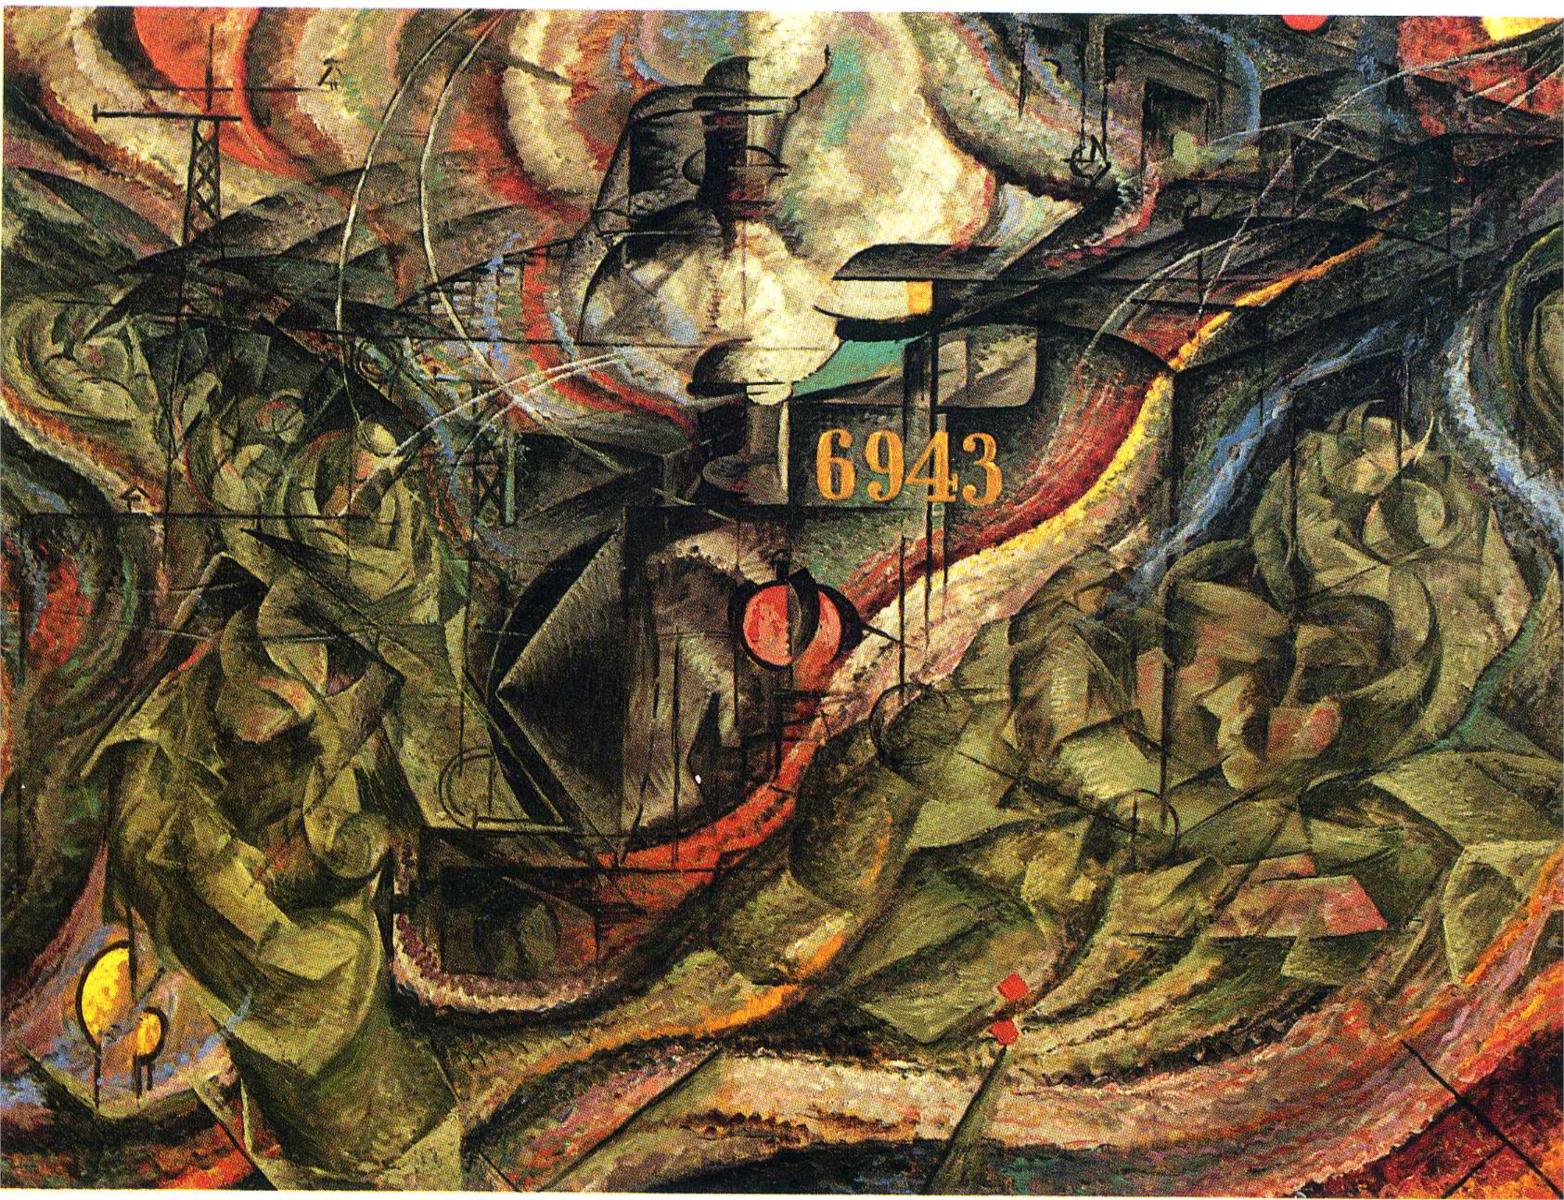 Stati d'animo I: gli addii by Umberto Boccioni - 1911 - 70.5 x 96.2 cm Museum of Modern Art